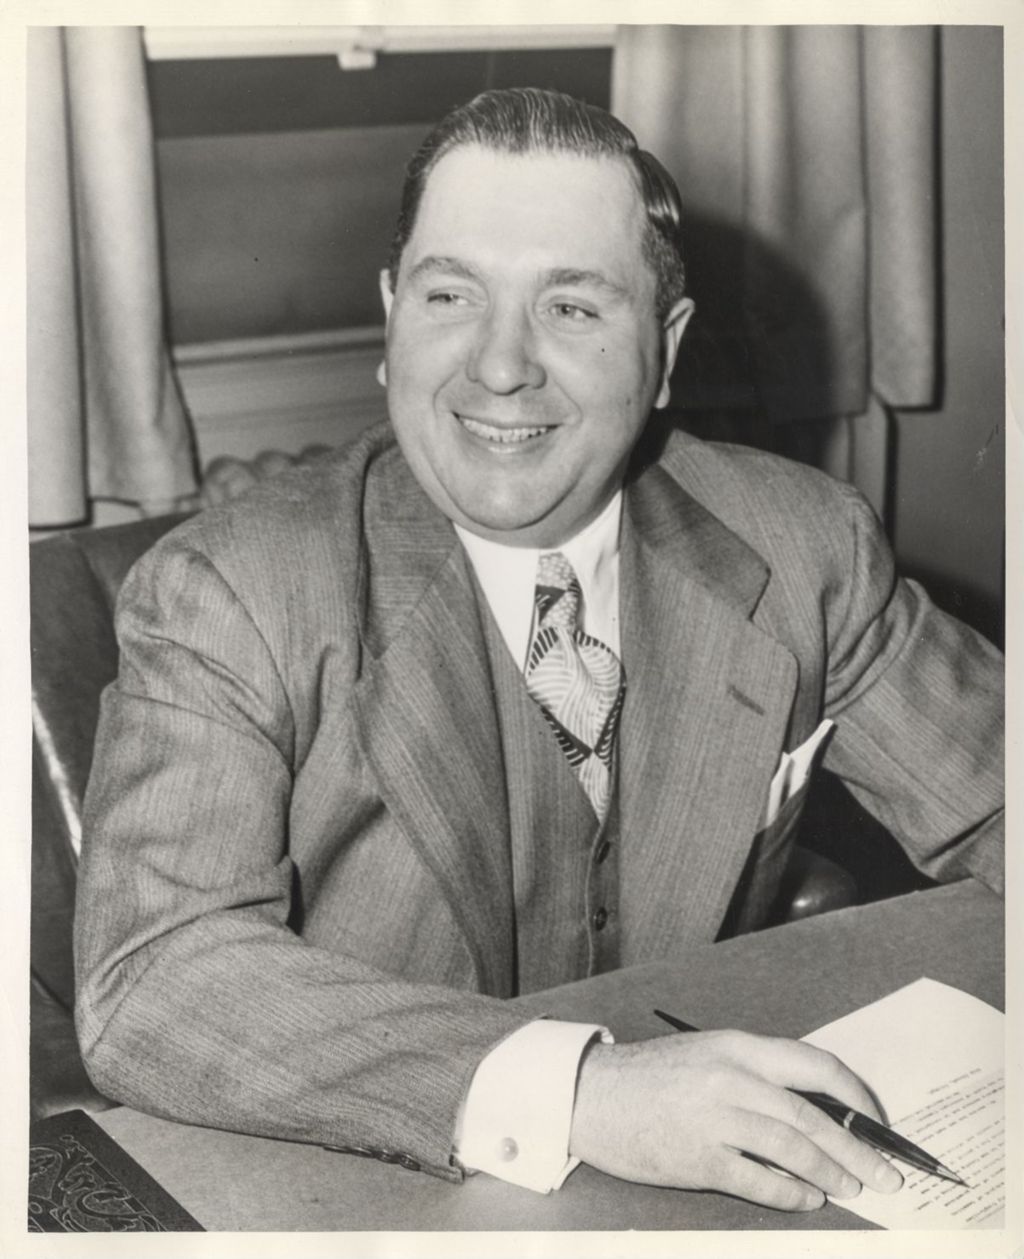 Richard J. Daley at a desk